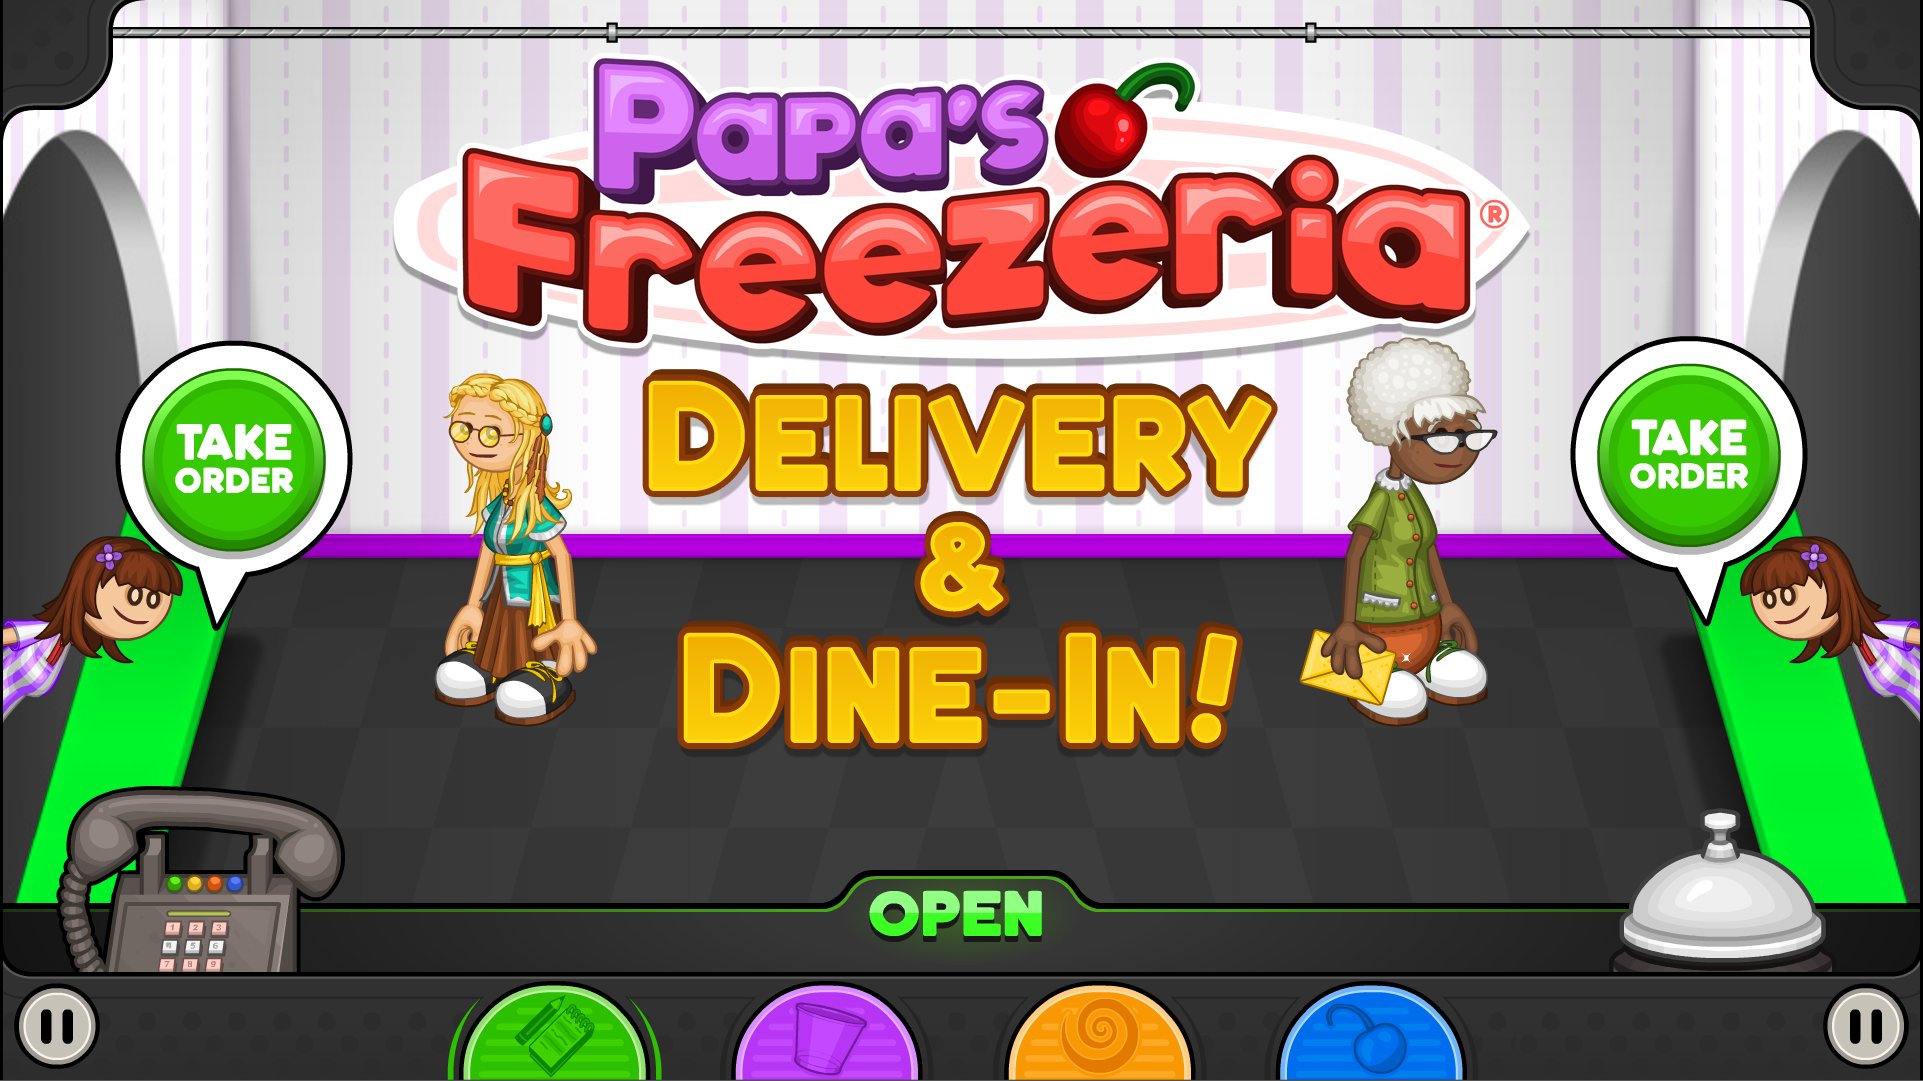 Papa's Freezeria Stickers! « Update « Flipline Studios Blog